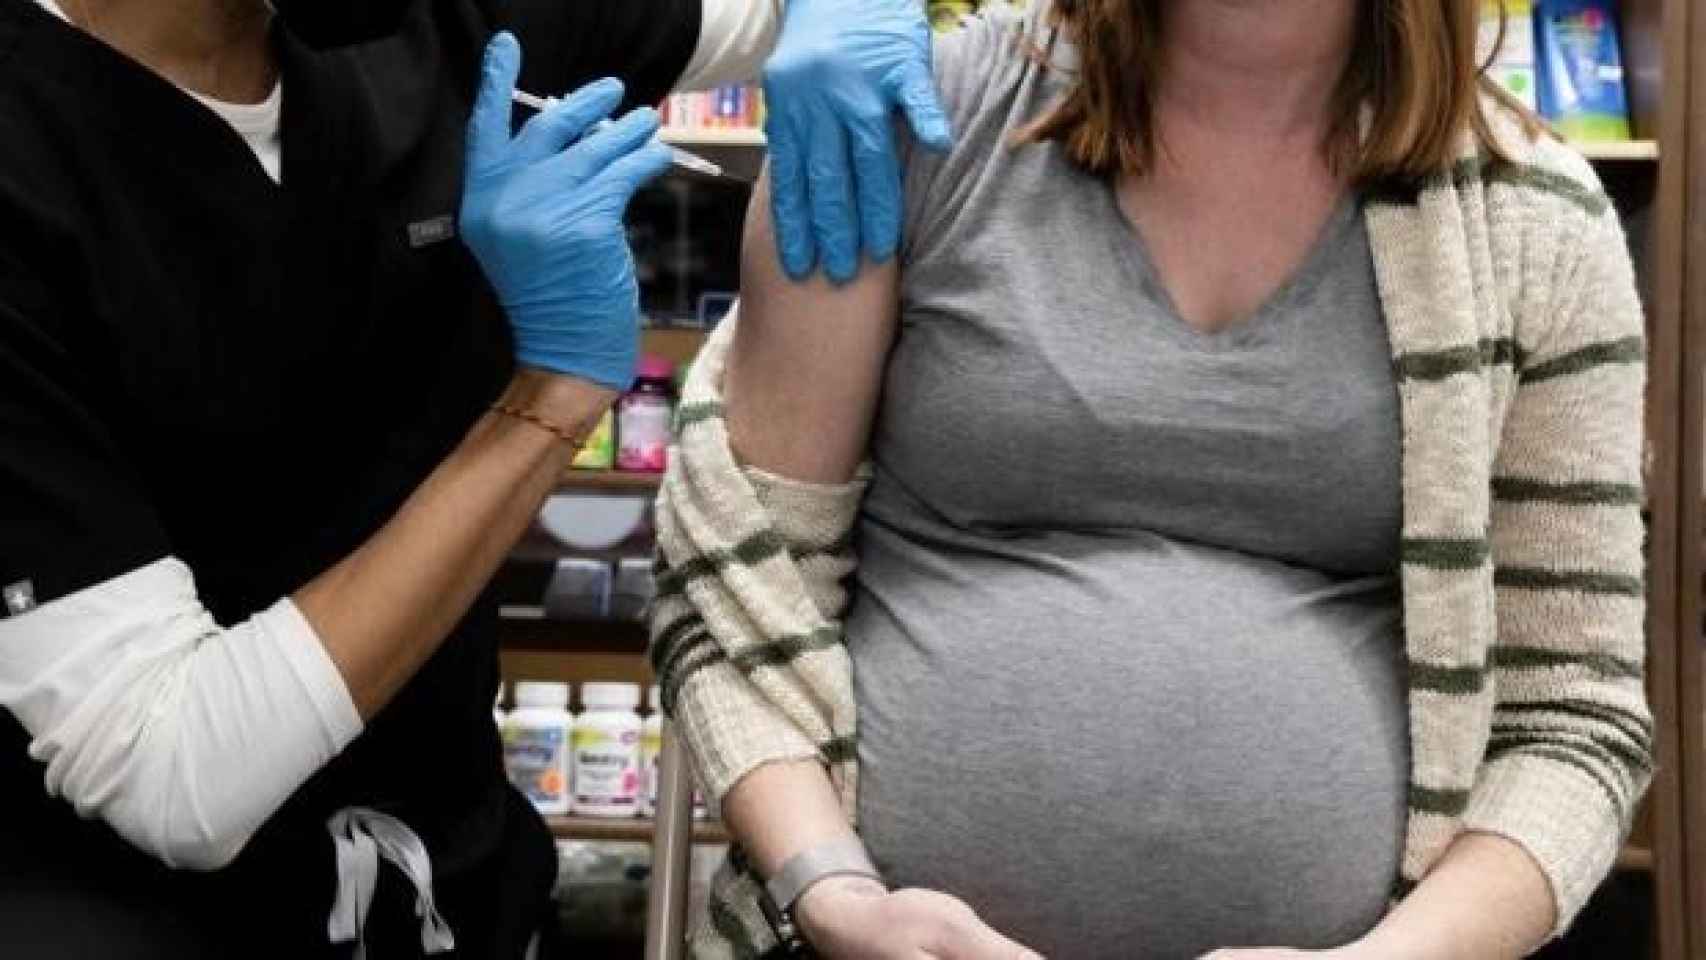 Una mujer embarazada recibe una vacuna.